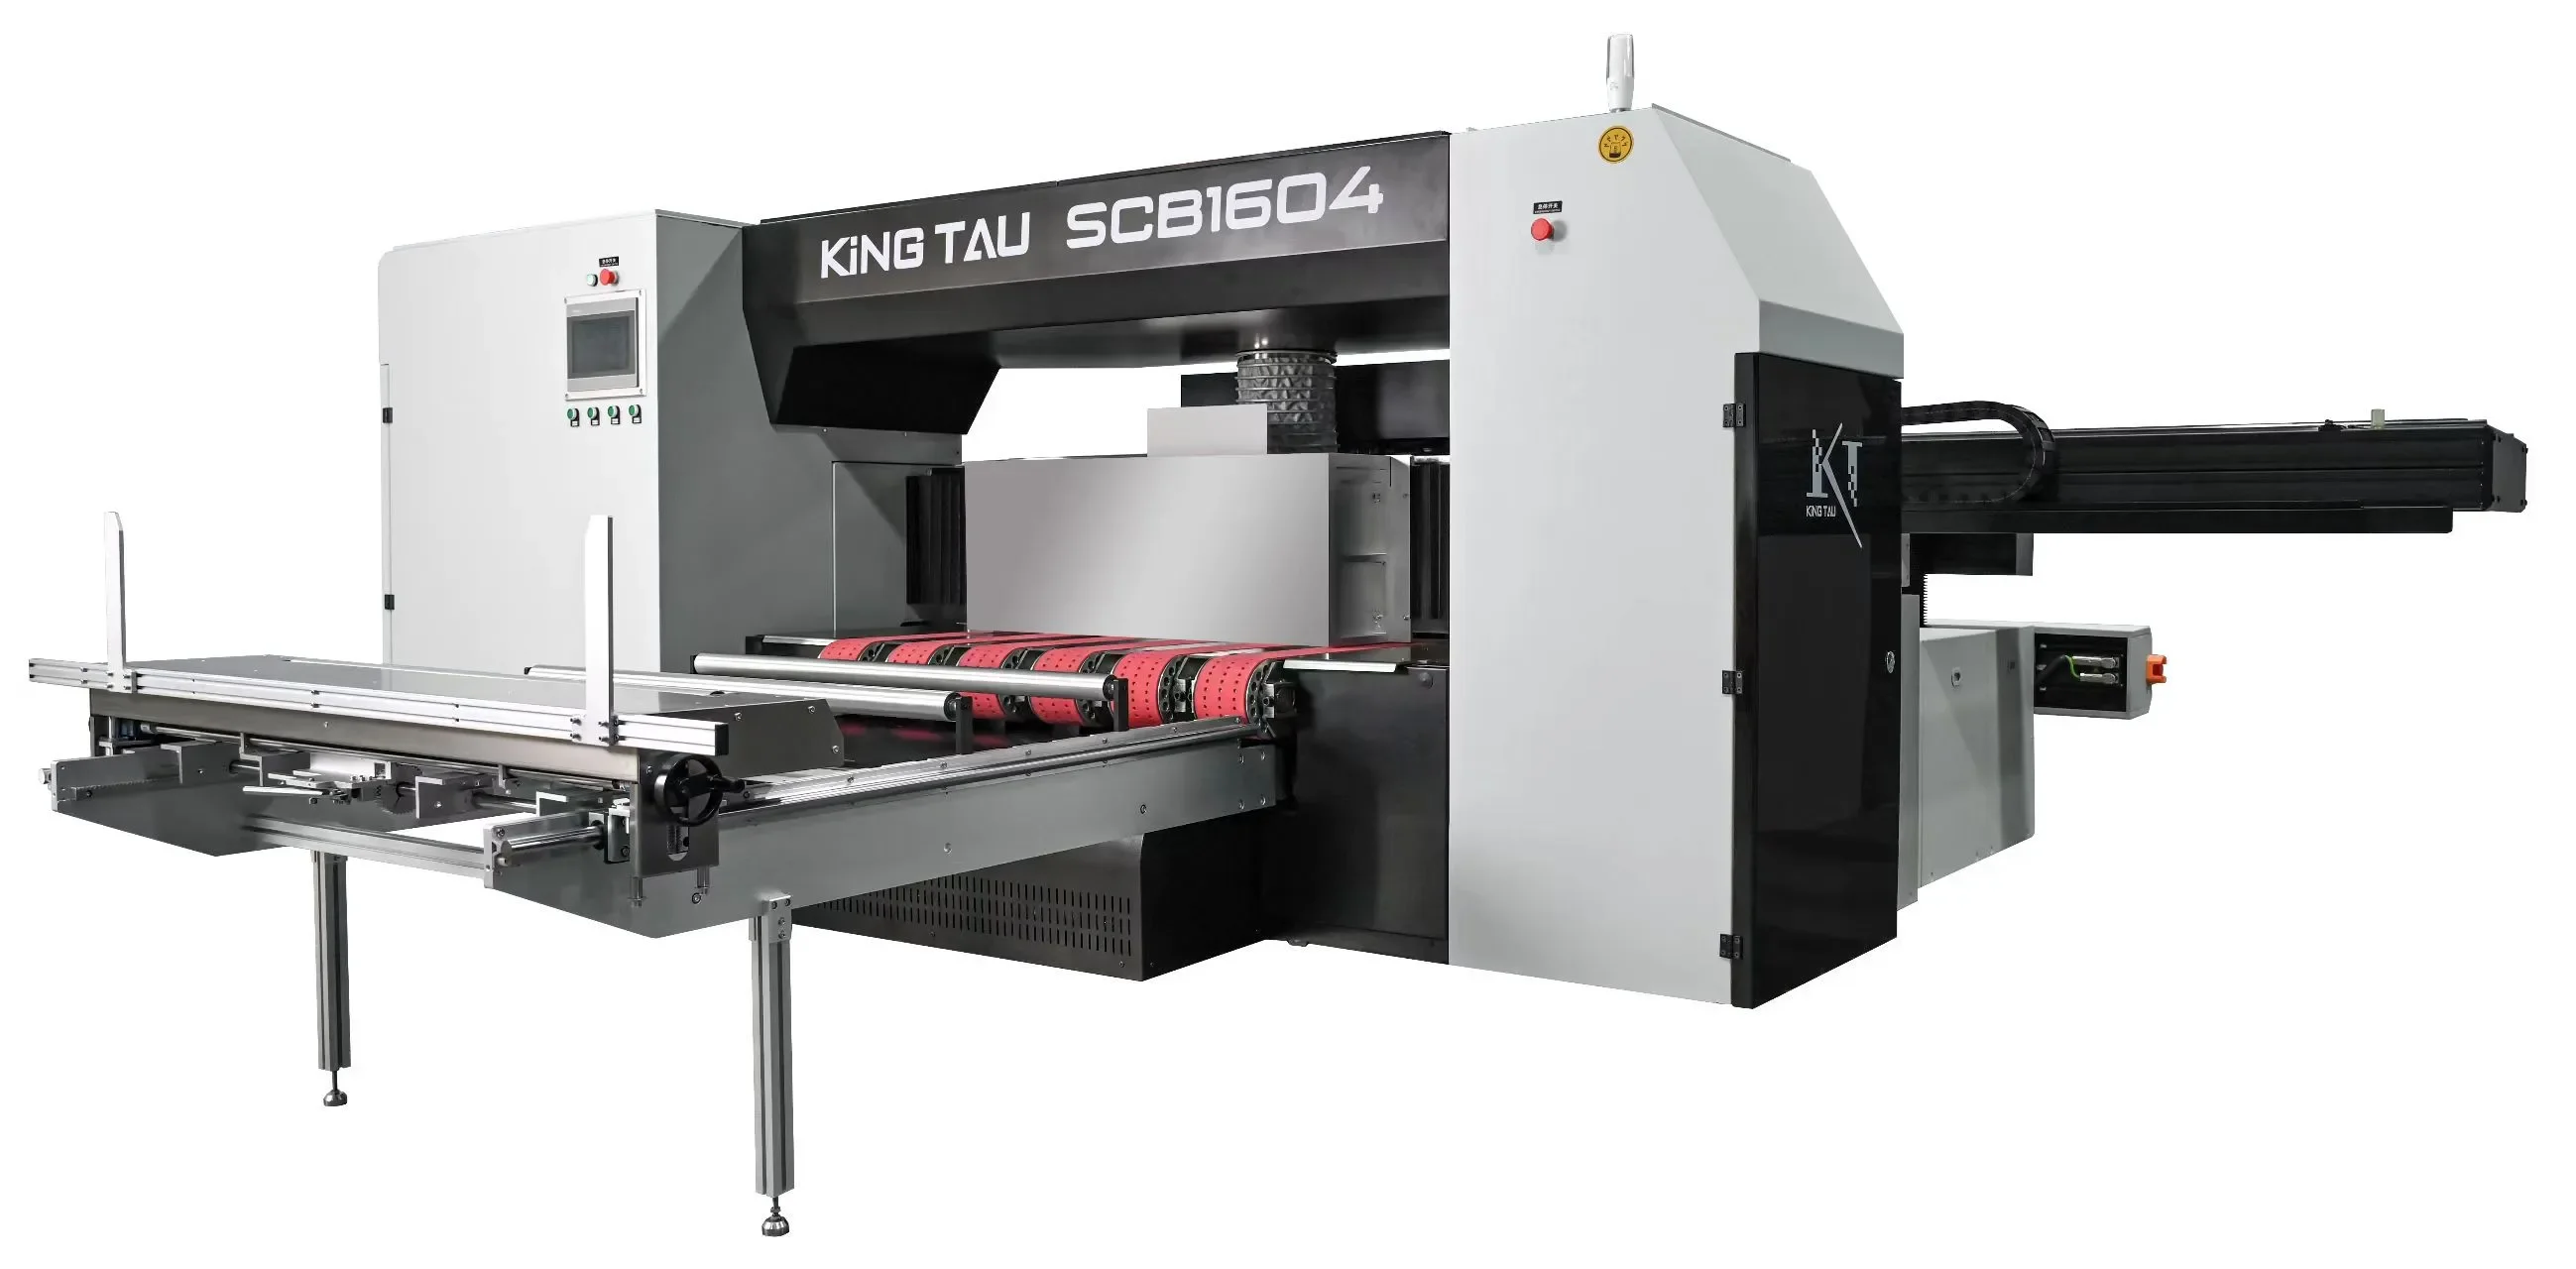 SCB1600 single pass industrial corrugated printer